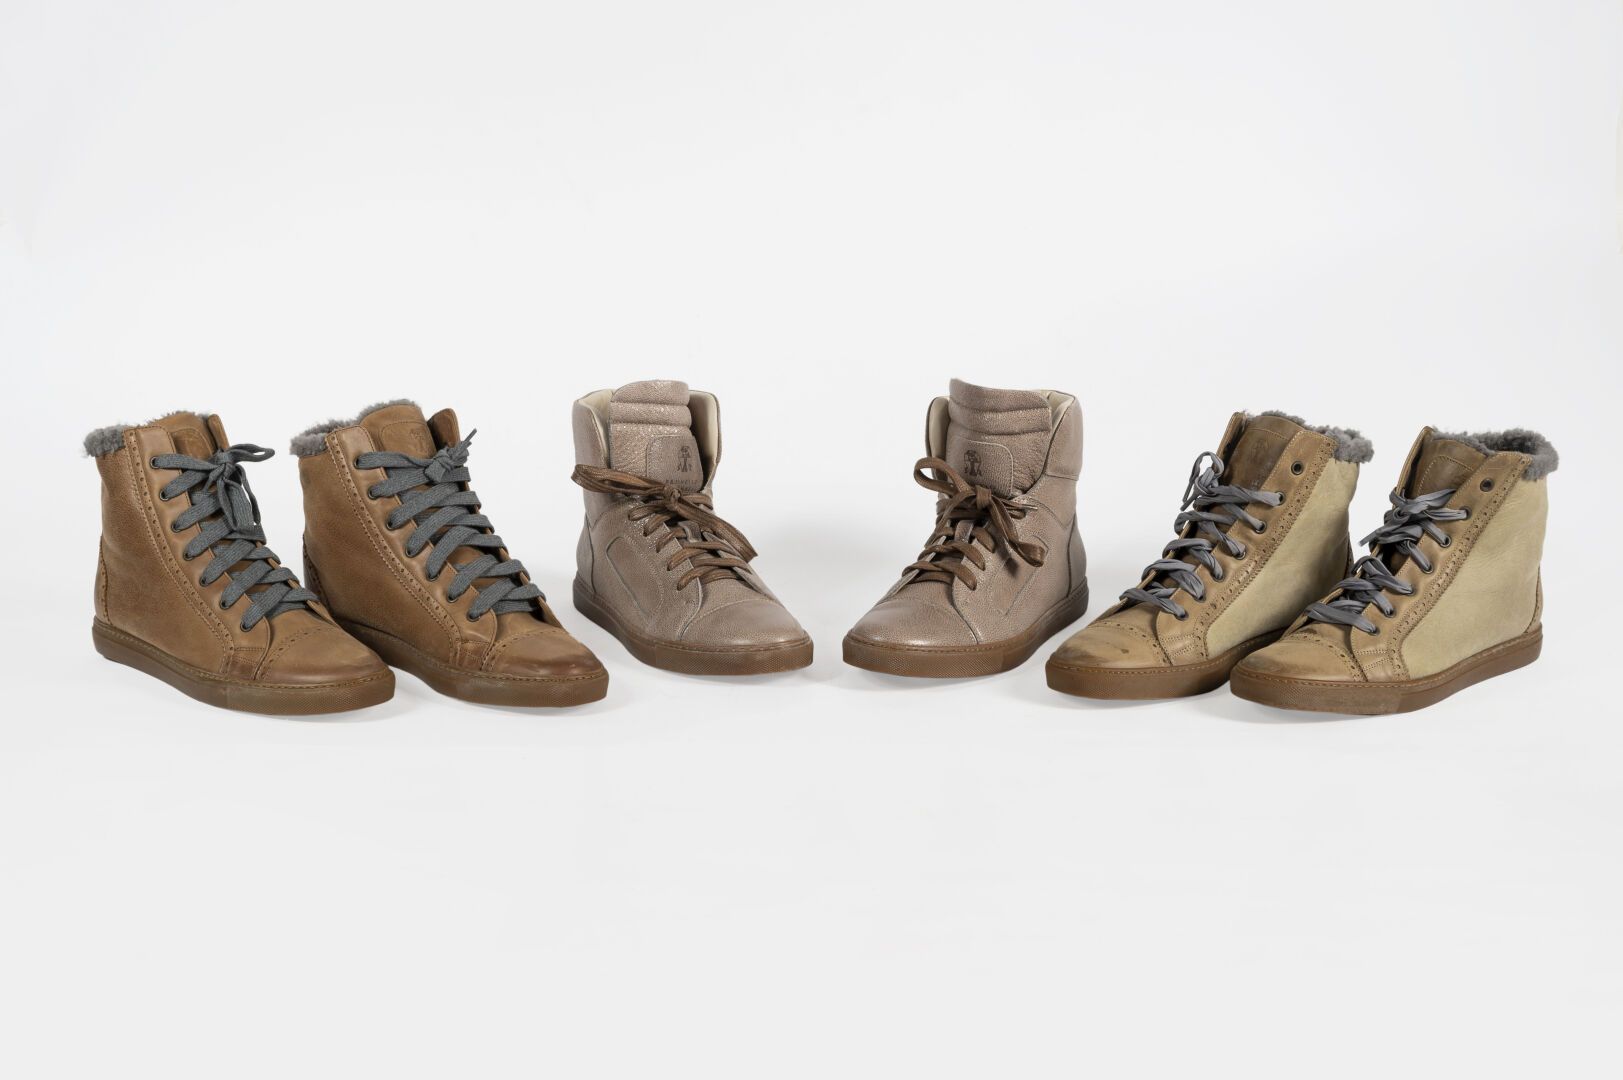 BRUNELLO CUCINELLI 三双棕色和米色的皮革训练鞋
尺寸40

使用状况